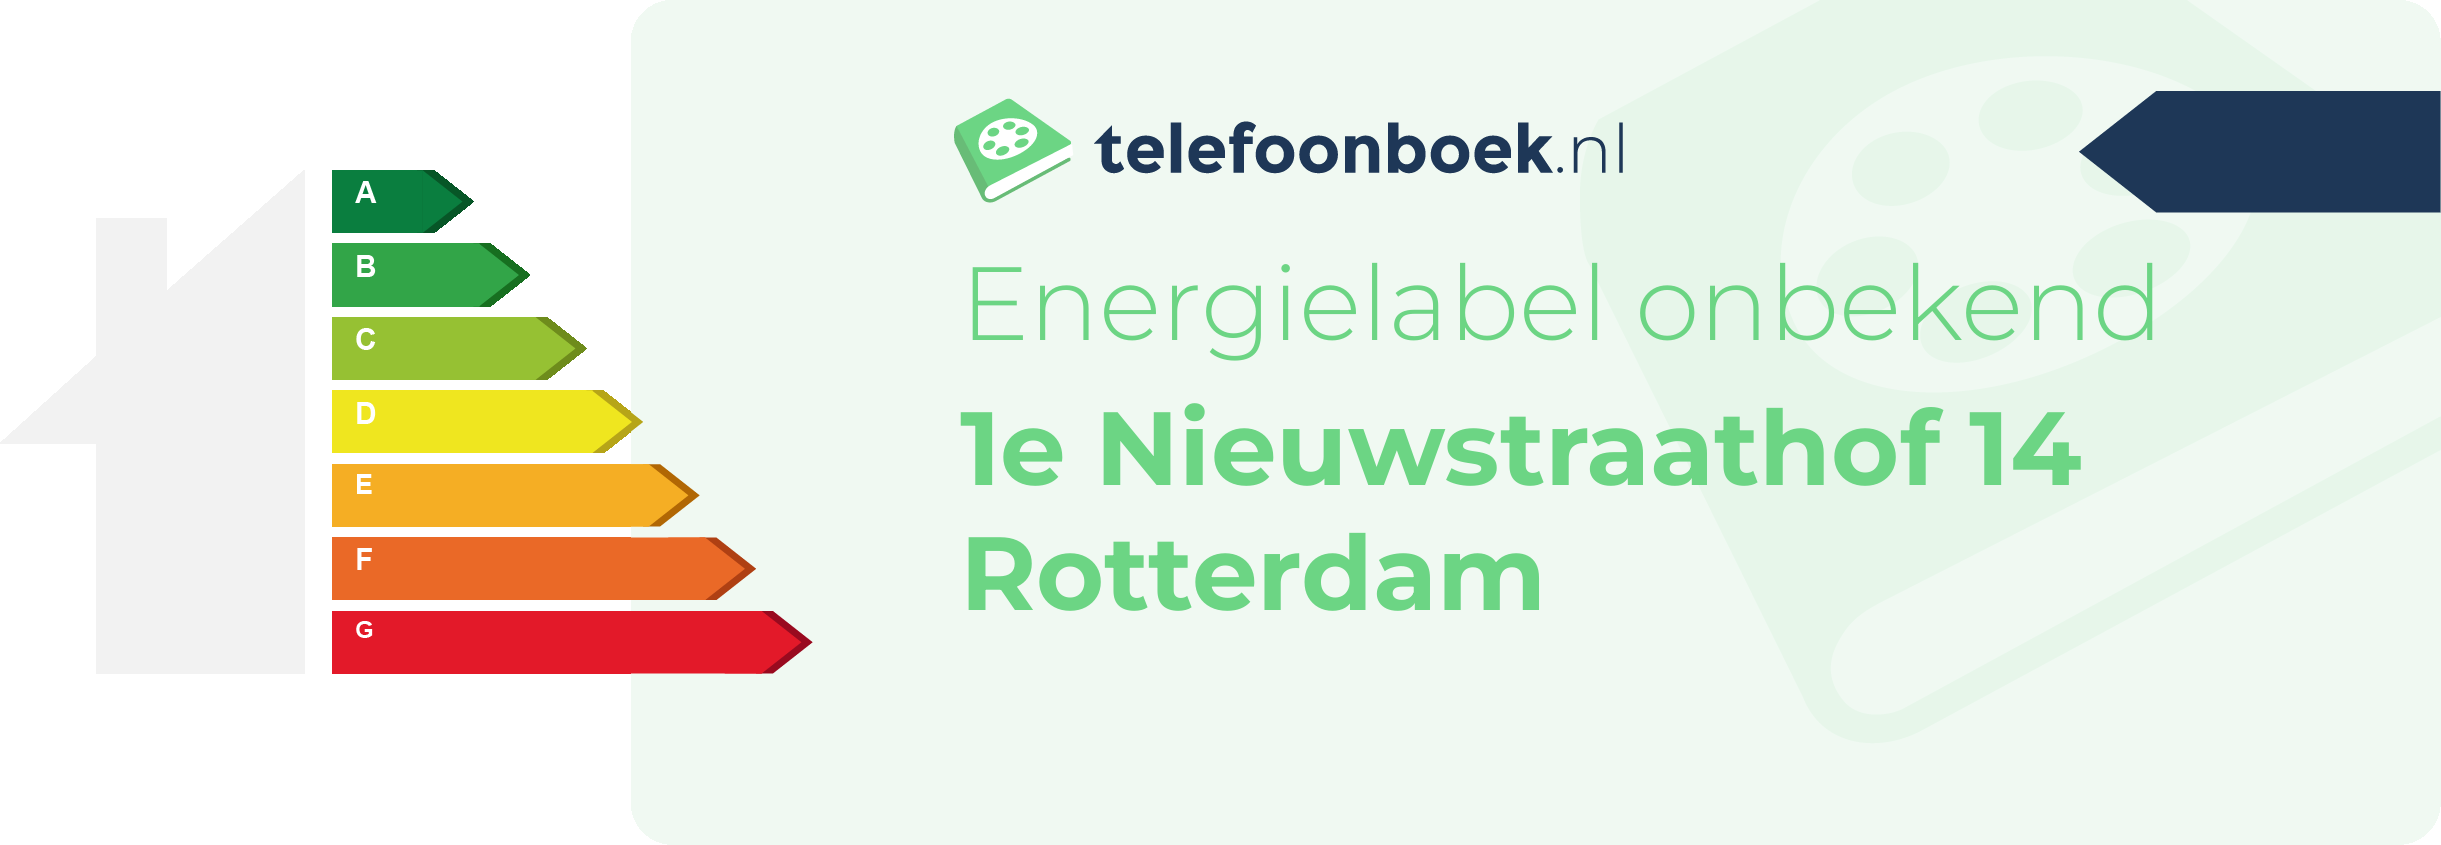 Energielabel 1e Nieuwstraathof 14 Rotterdam